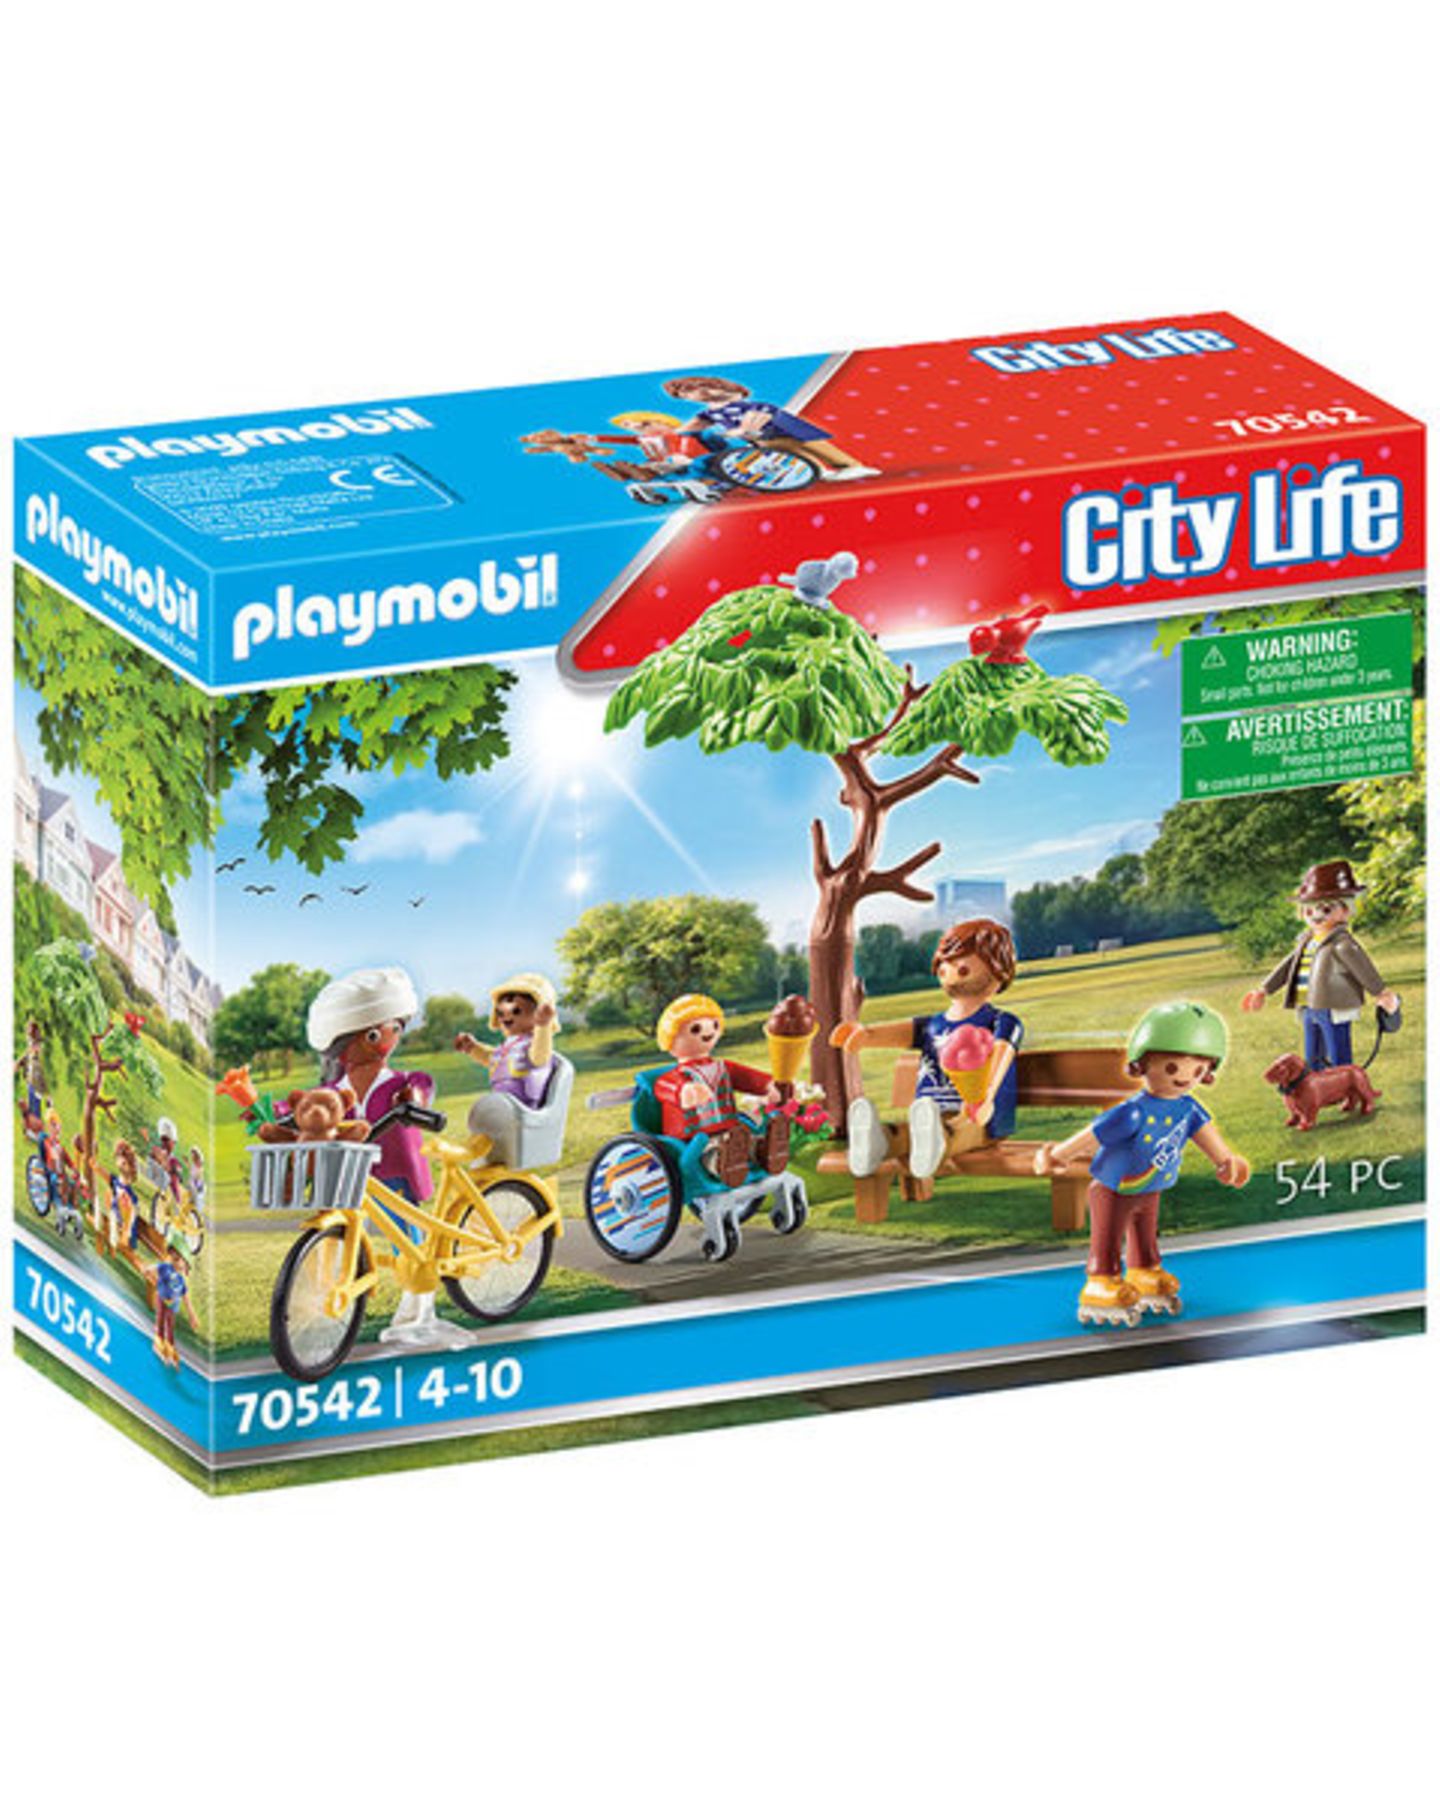 Produktfoto: Playmobil City Life